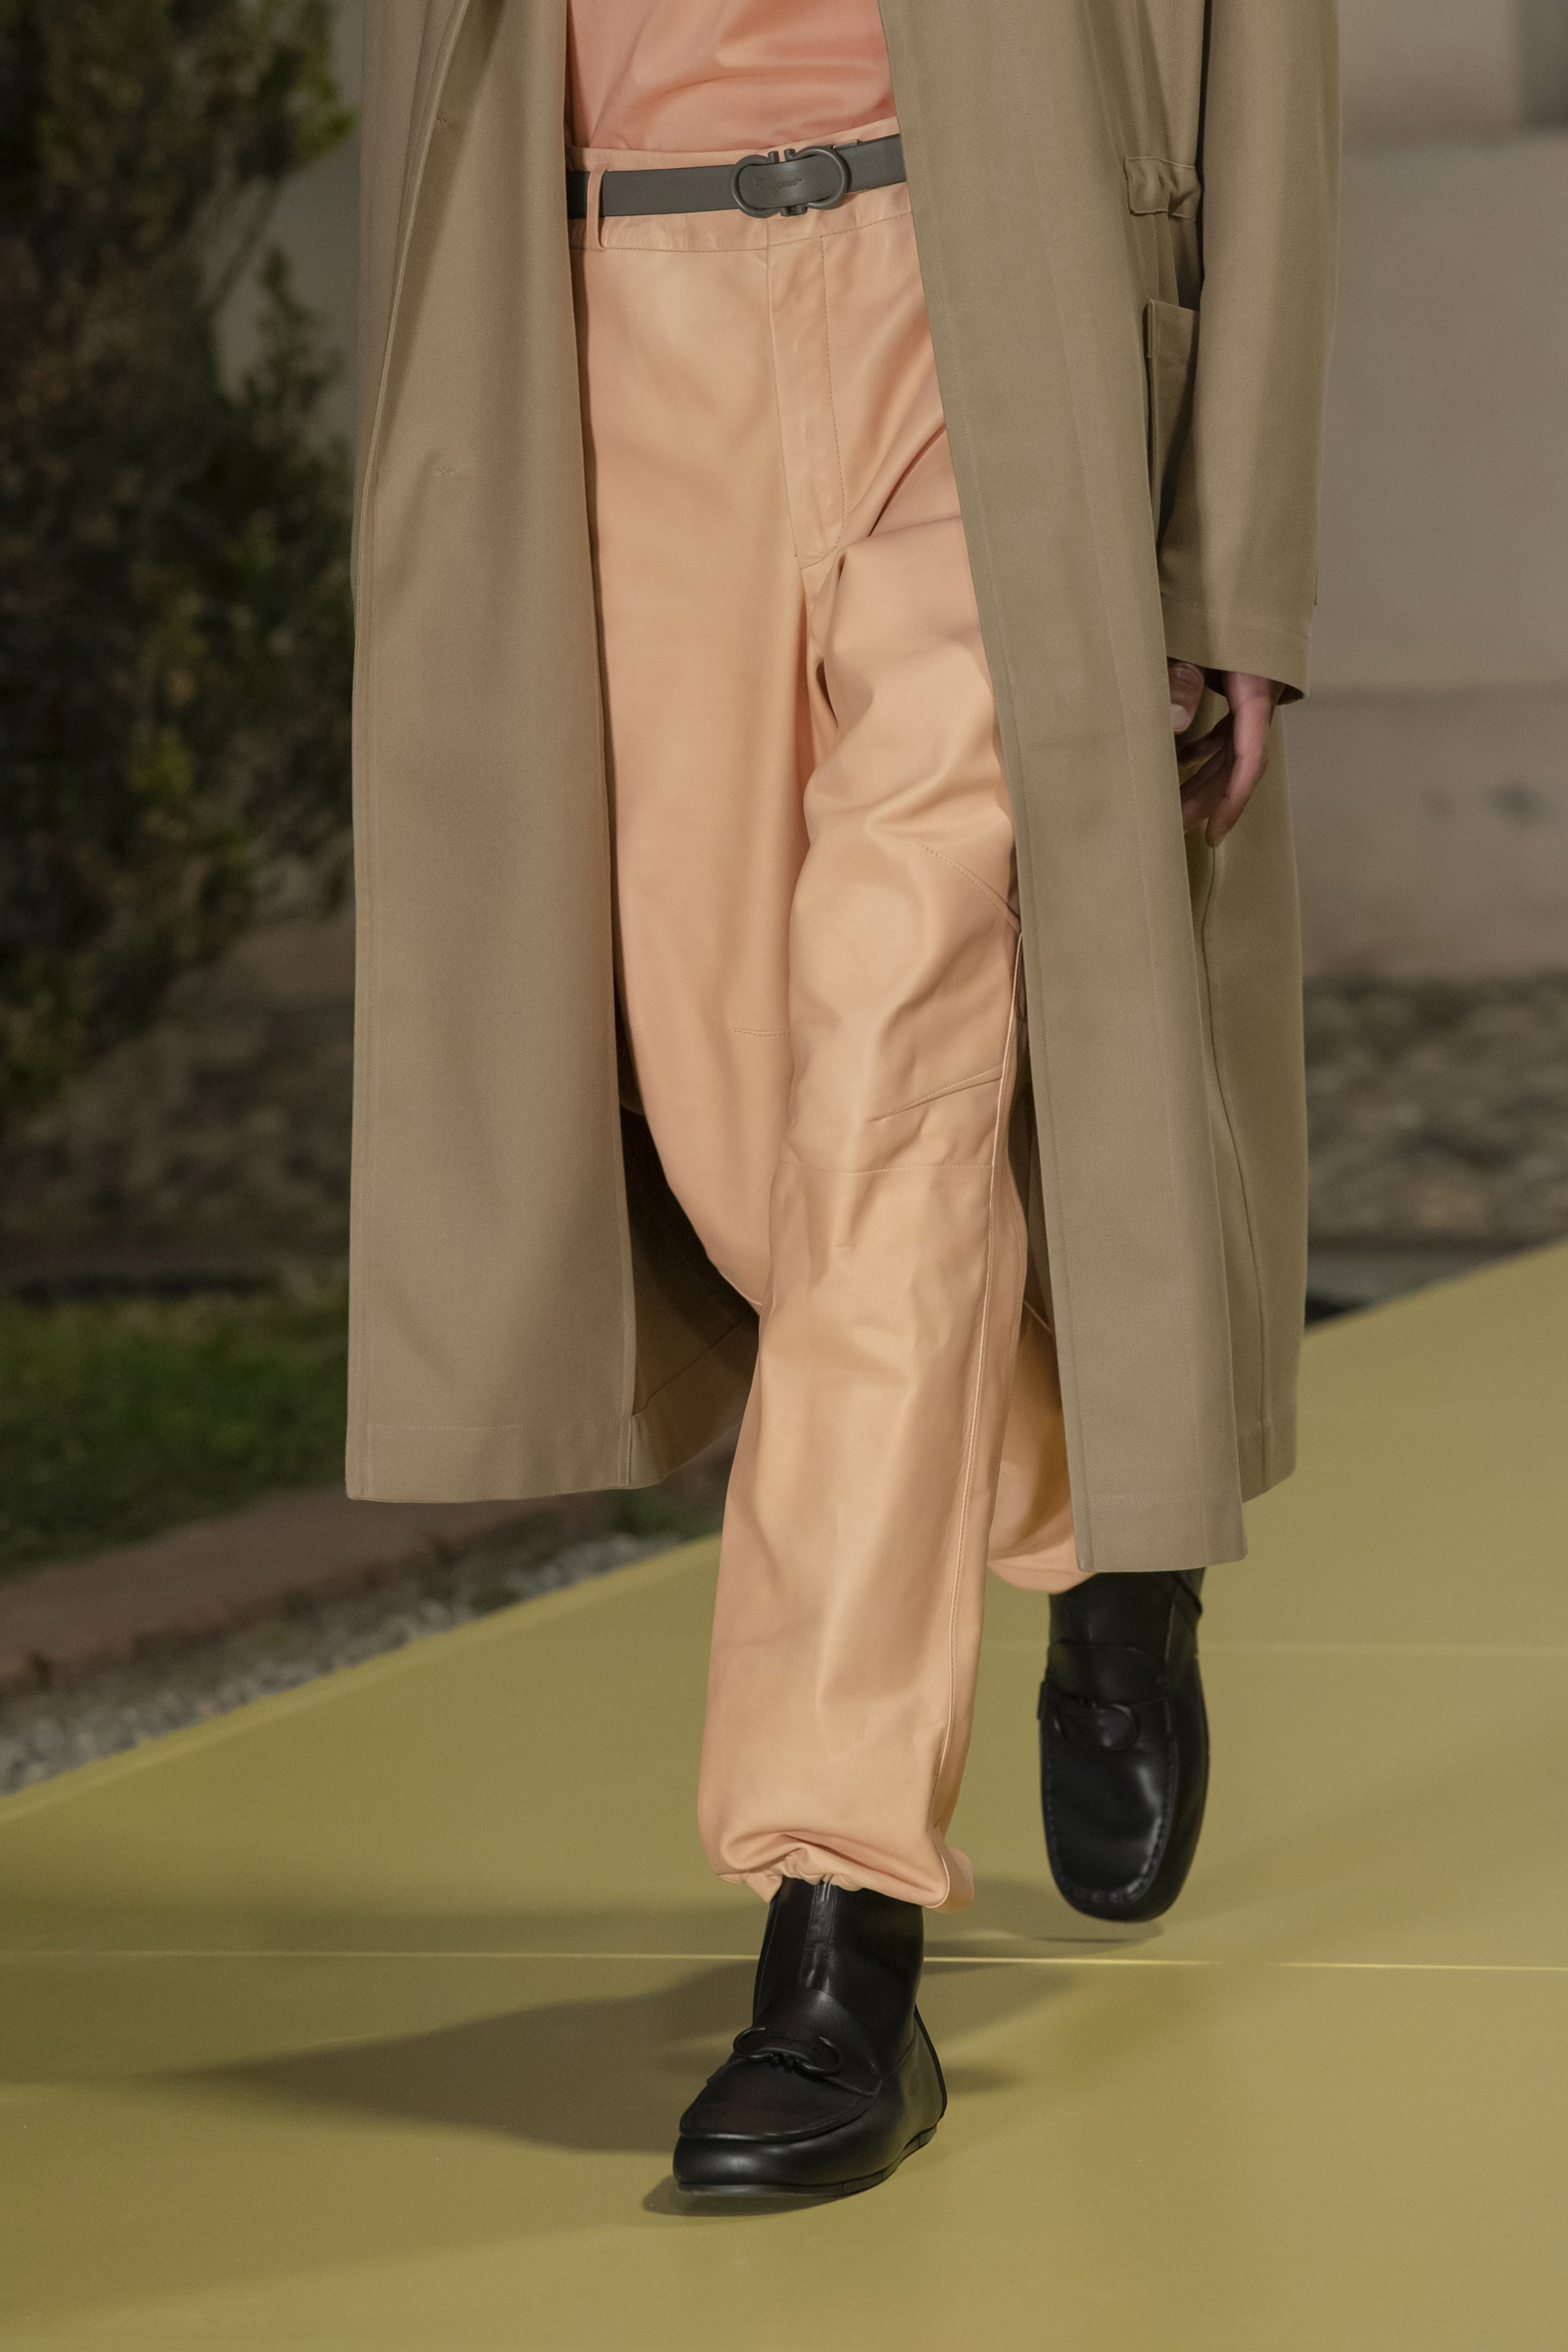 Salvatore Ferragamo Spring 2021 Fashion Show Details